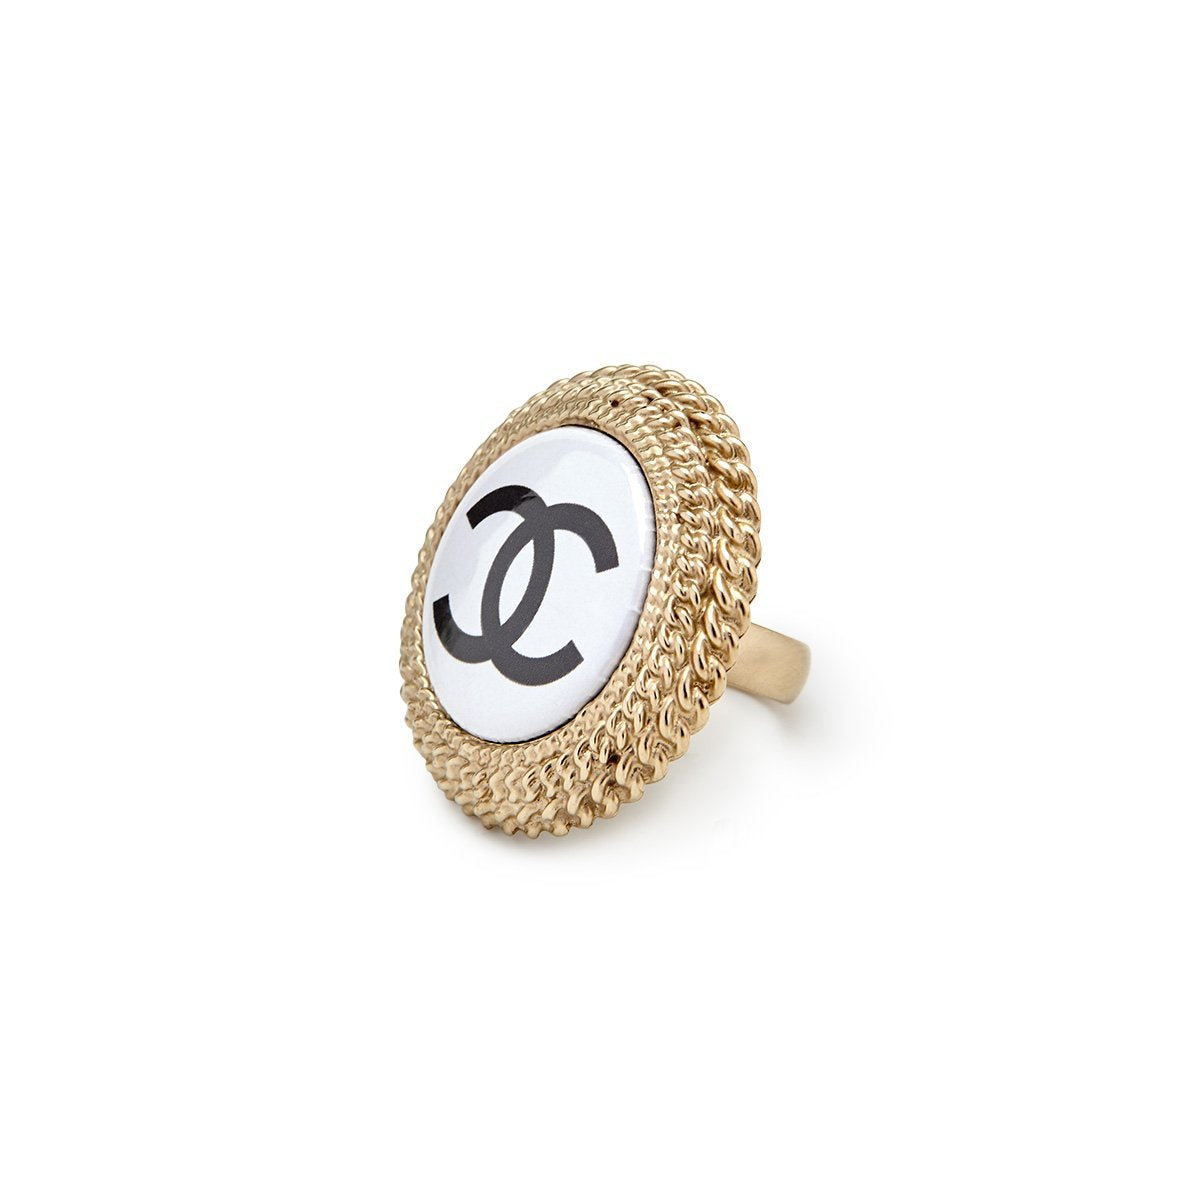 Vintage Chanel Peridot Ring at Susannah Lovis Jewellers